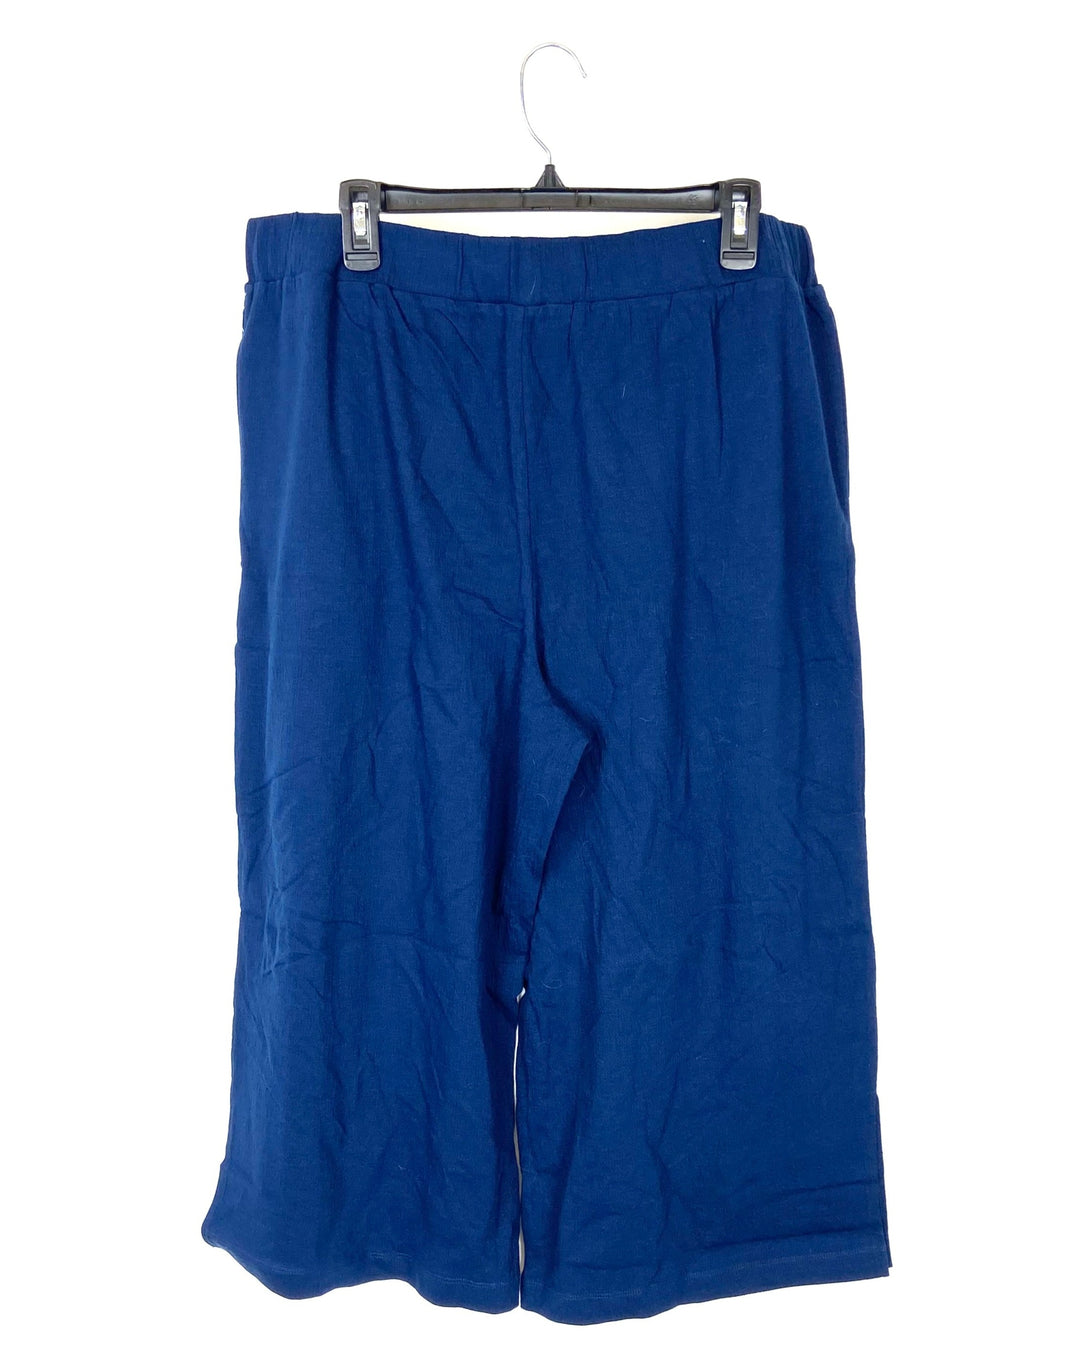 Navy Blue Crop Pants - Size 1X